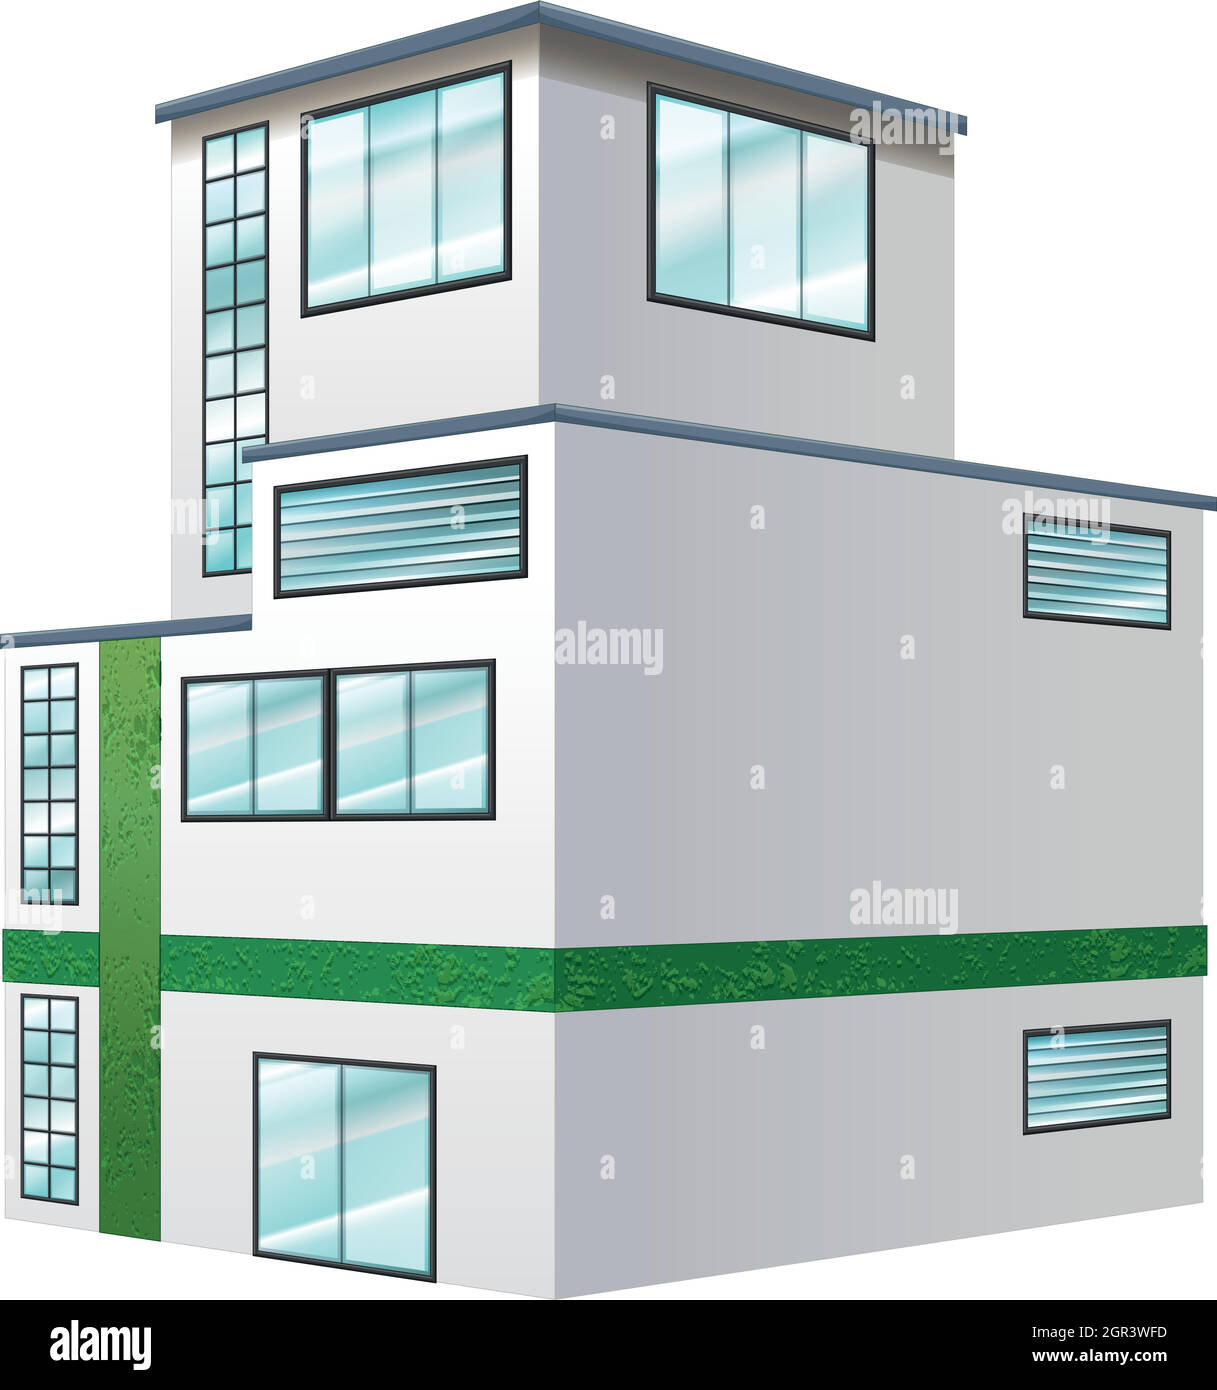 Architecture design for apartment building Stock Vector